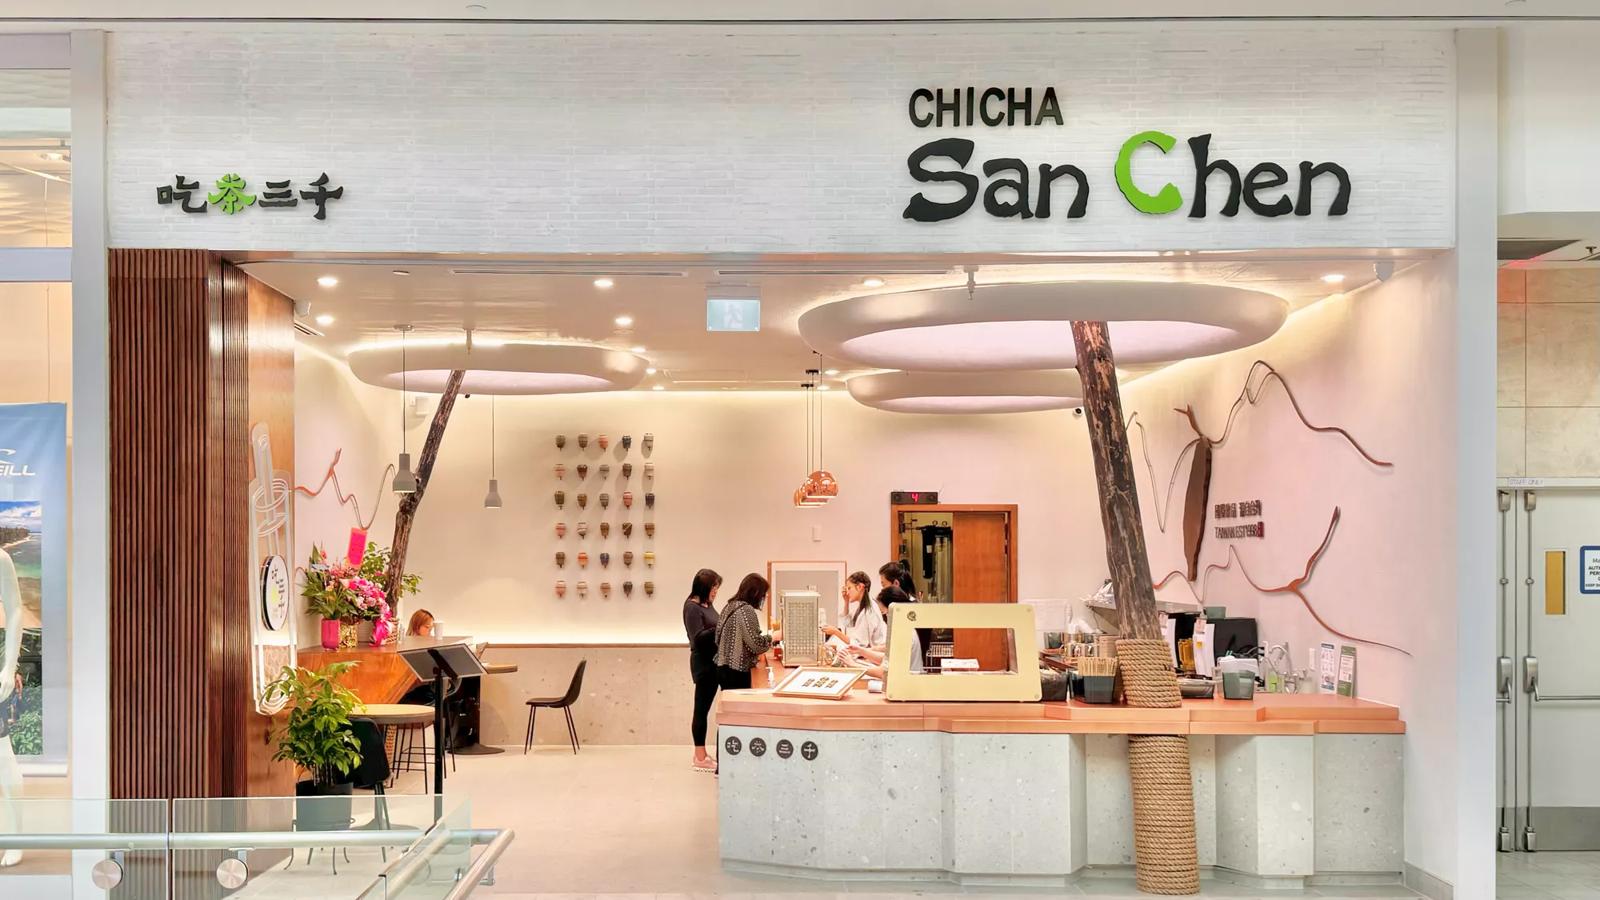 [CF Markville] CHICHA San Chen Now Open! - Image 2